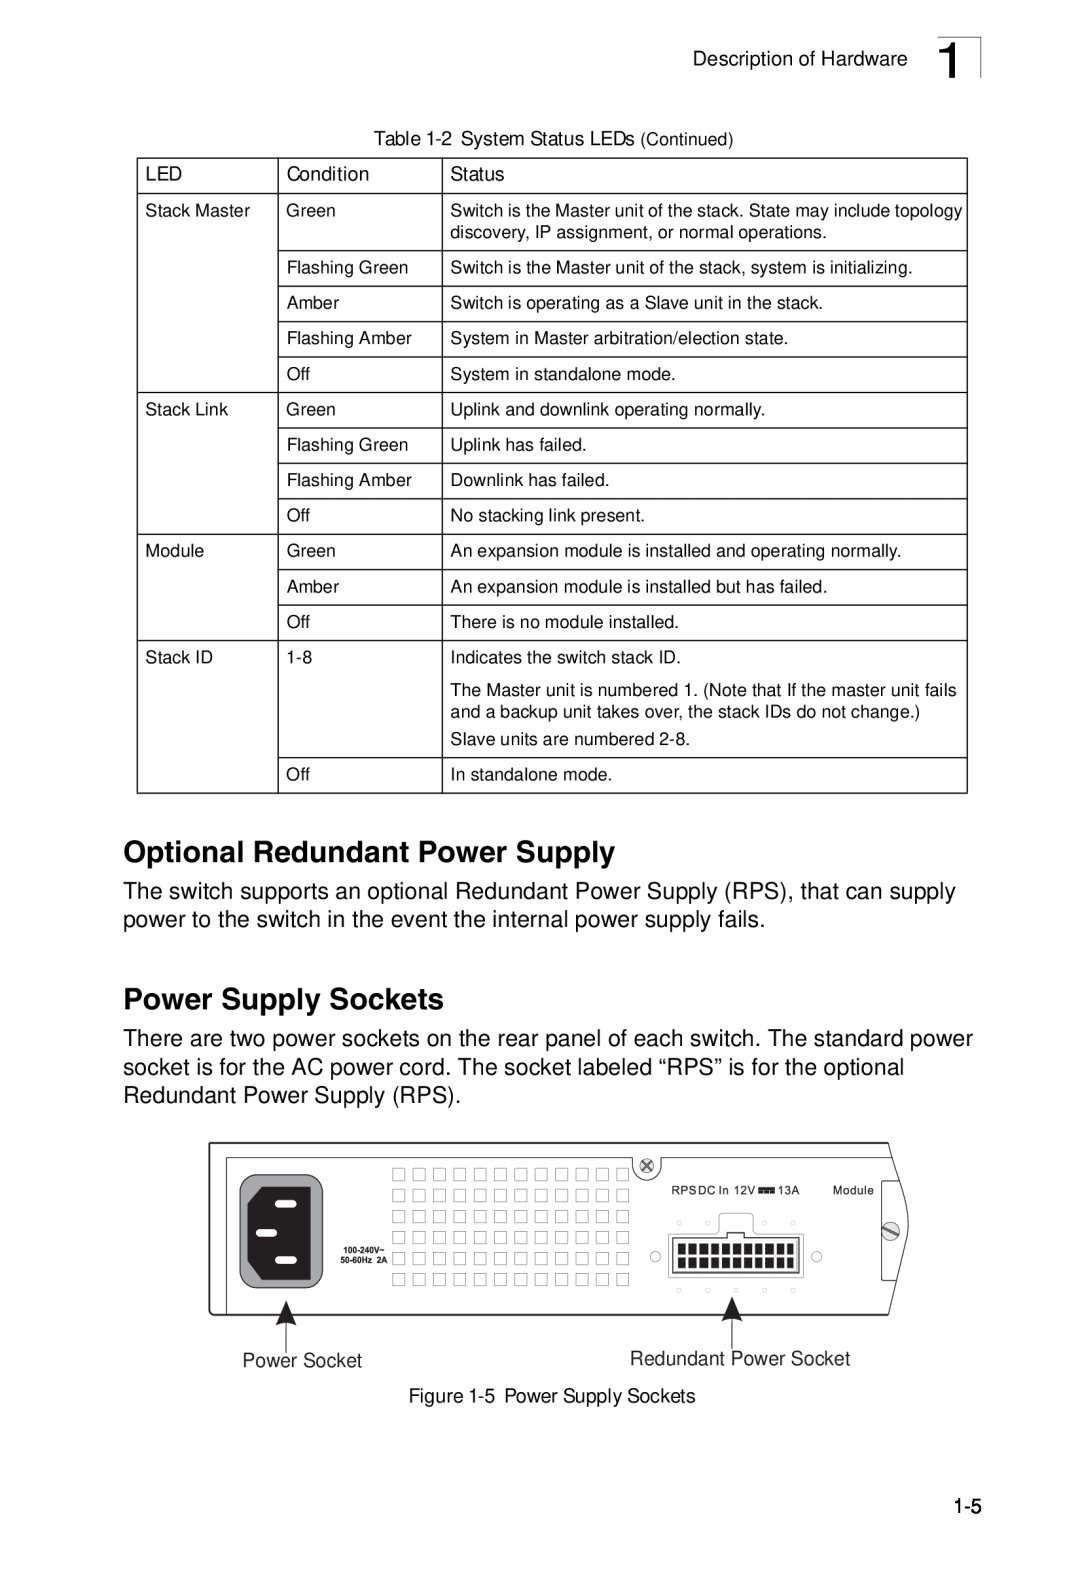 SMC Networks SMC8950EM Optional Redundant Power Supply, Power Supply Sockets, 2 System Status LEDs Continued, Condition 